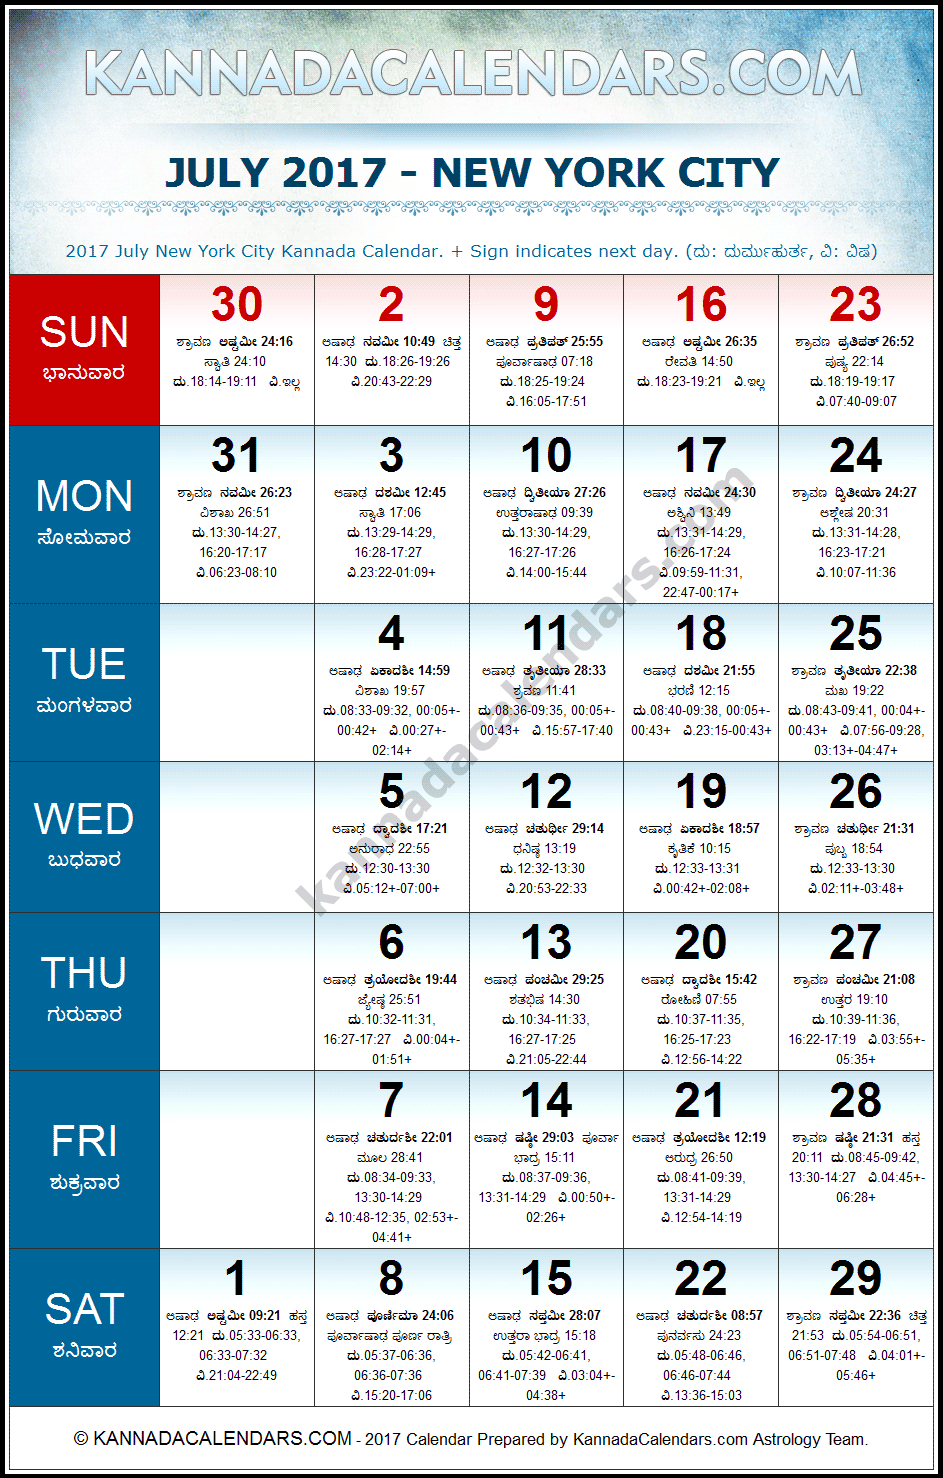 July 2017 Kannada Calendar for New York, USA